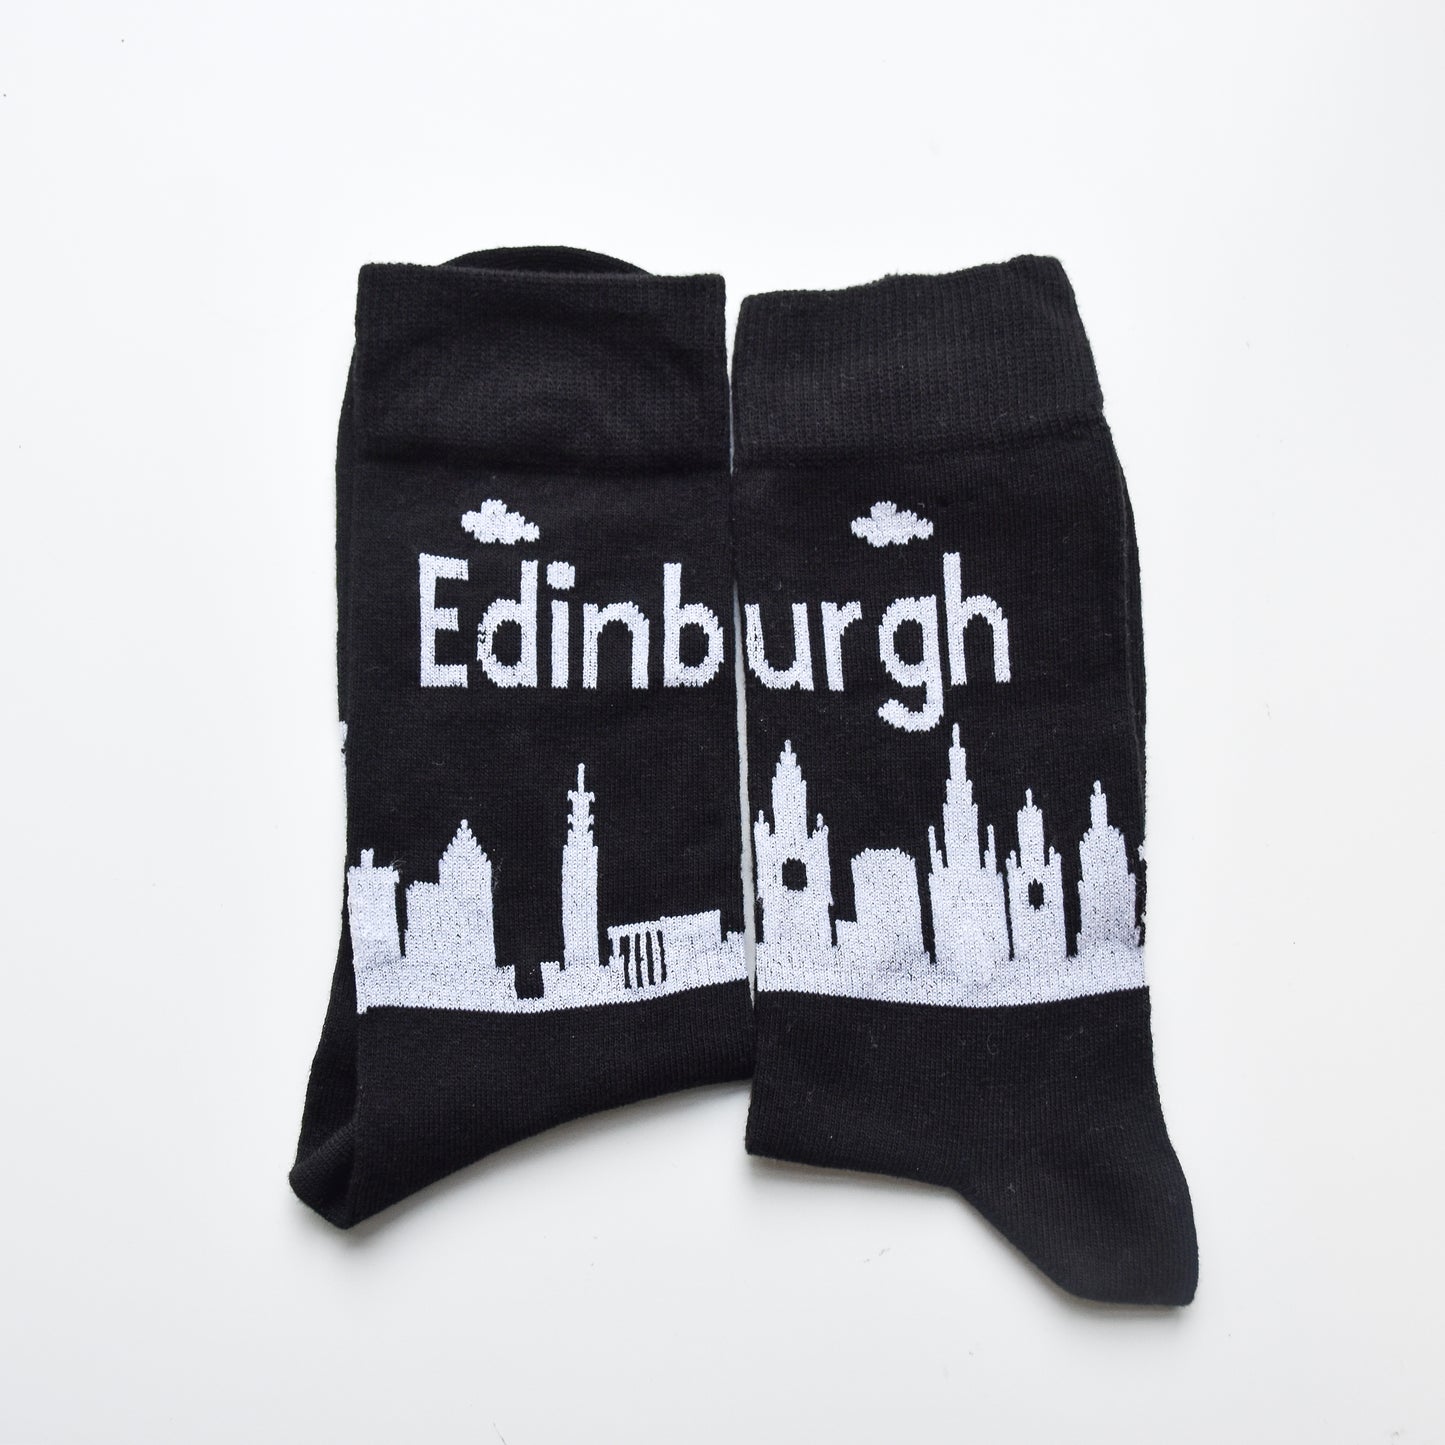 Black socks featuring the Edinburgh skyline in white print. 